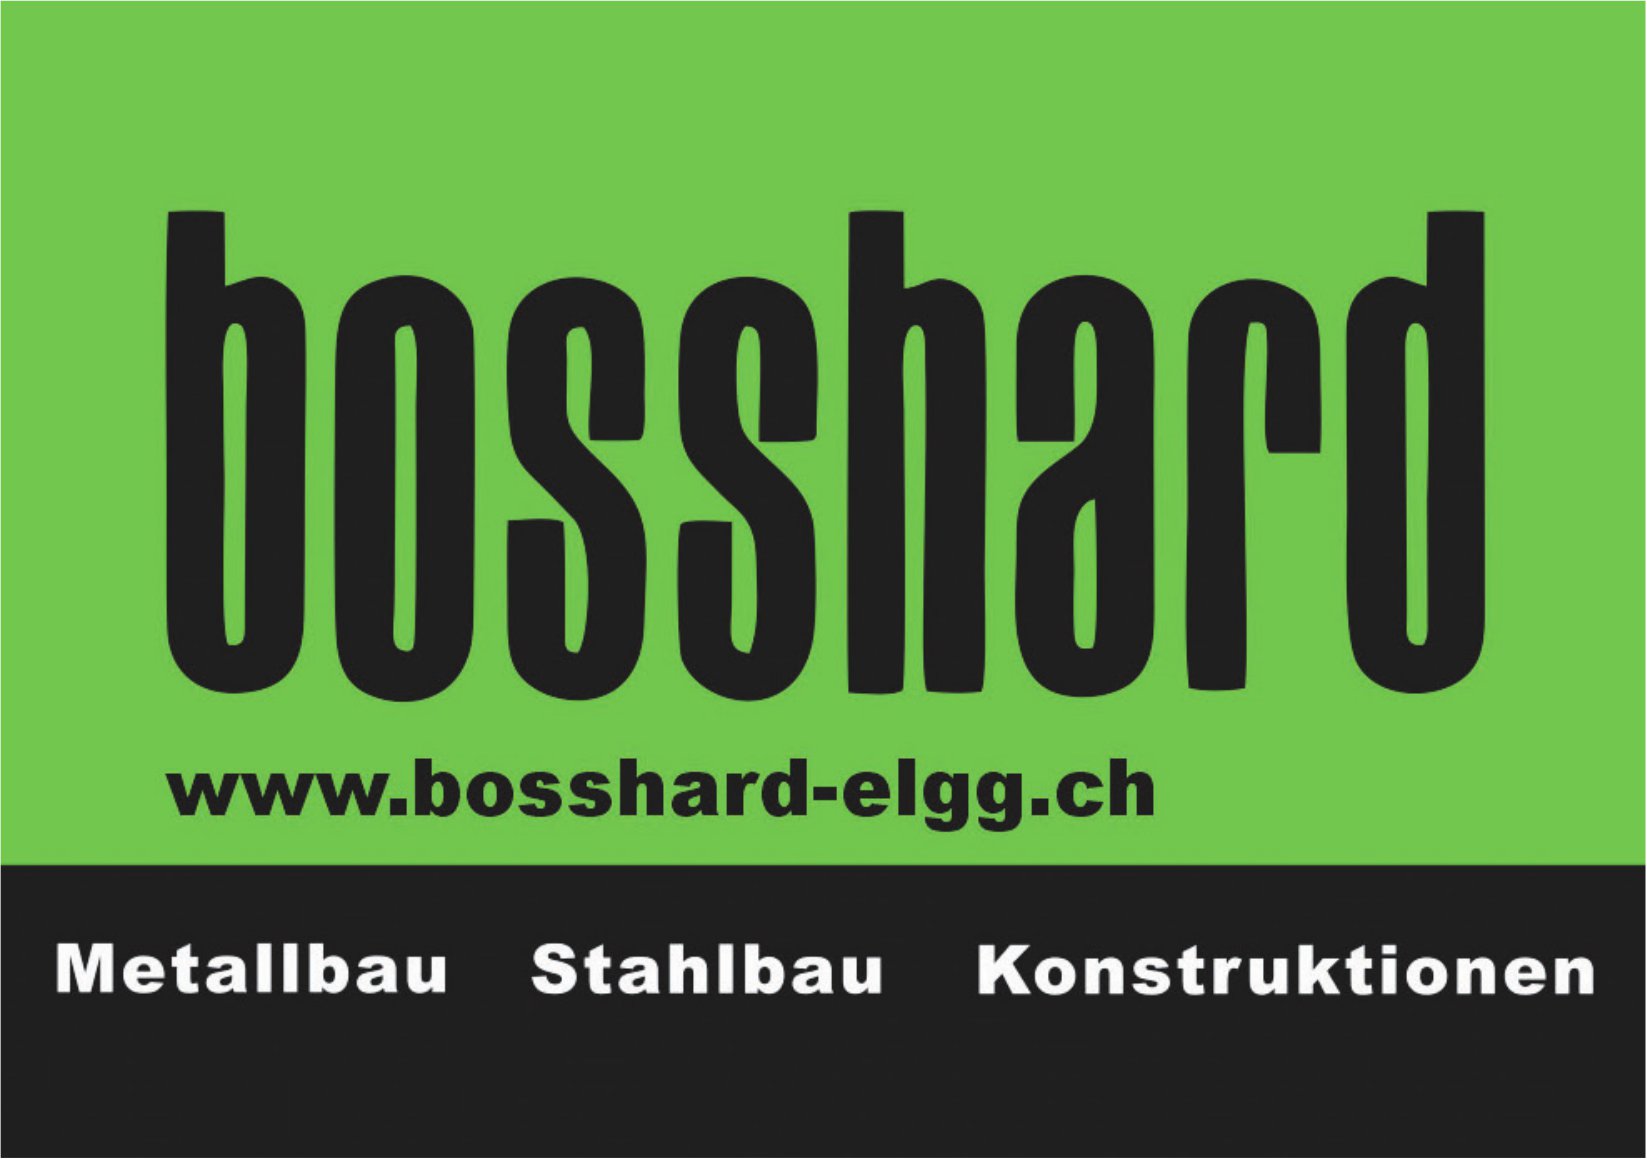 Bosshard, Elgg - Metallbau, Stahlbau, Konstruktionen